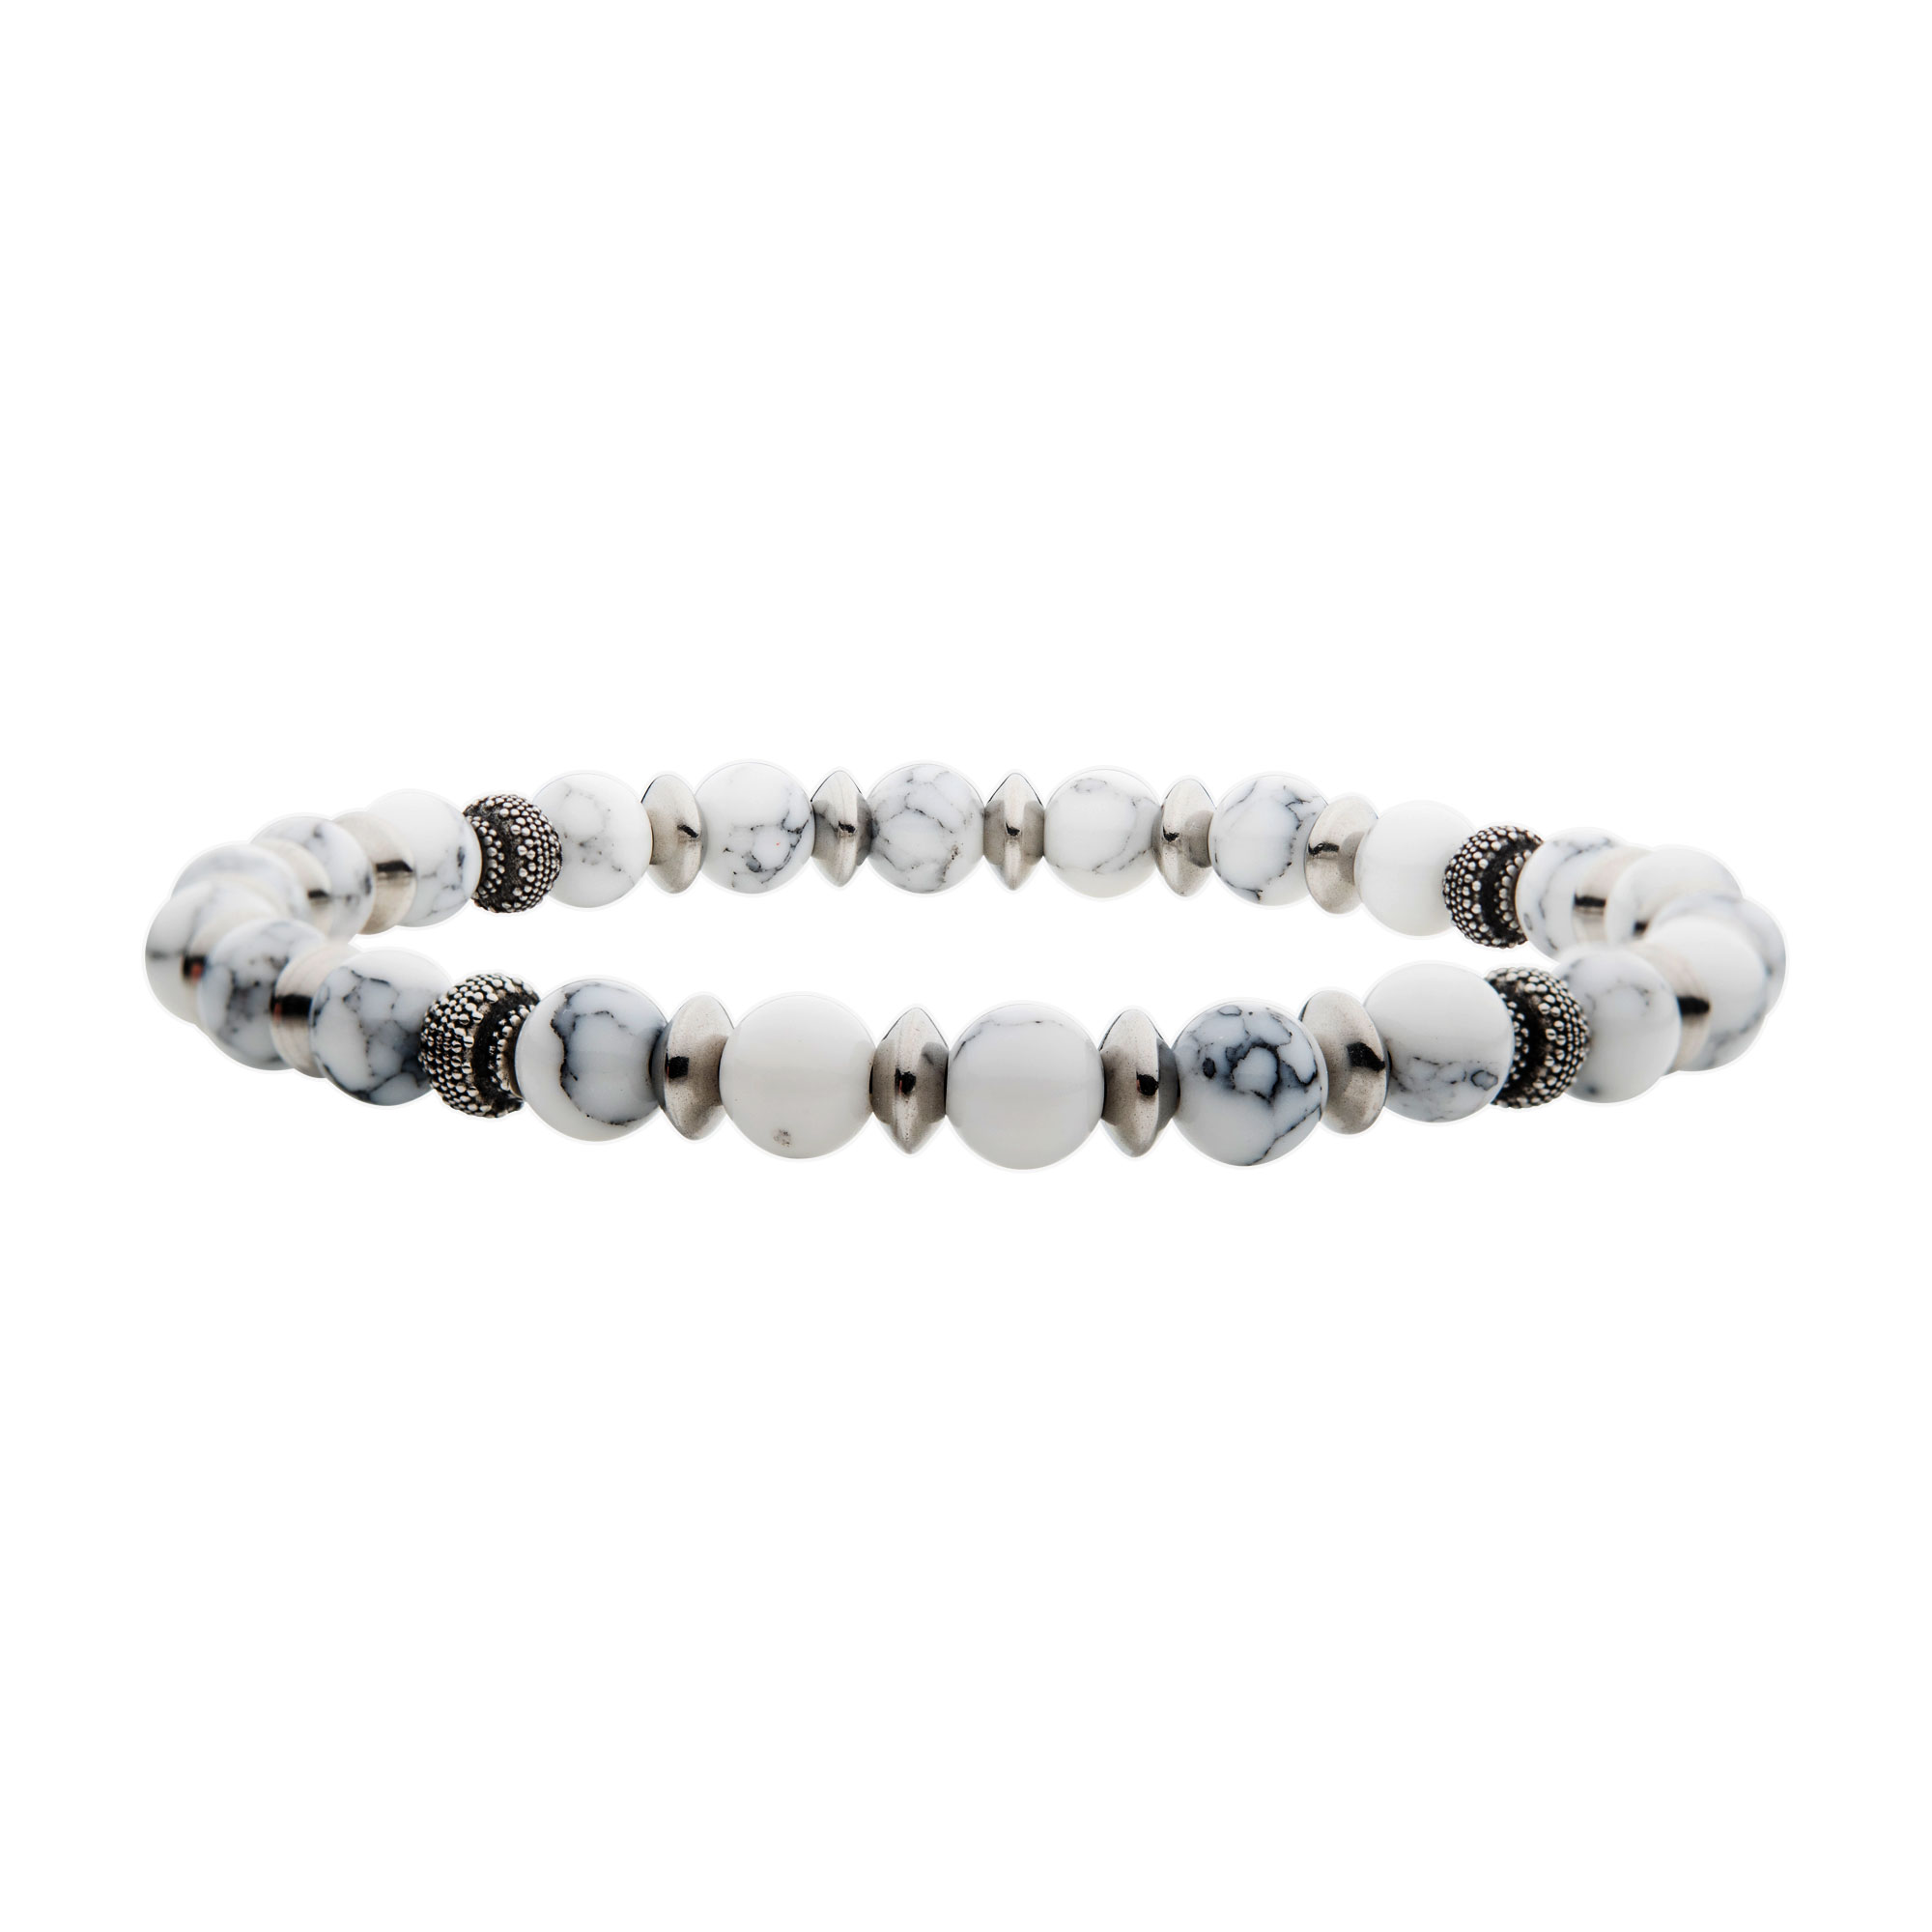 White Howlite Stones with Black Oxidized Beads Bracelet Enchanted Jewelry Plainfield, CT